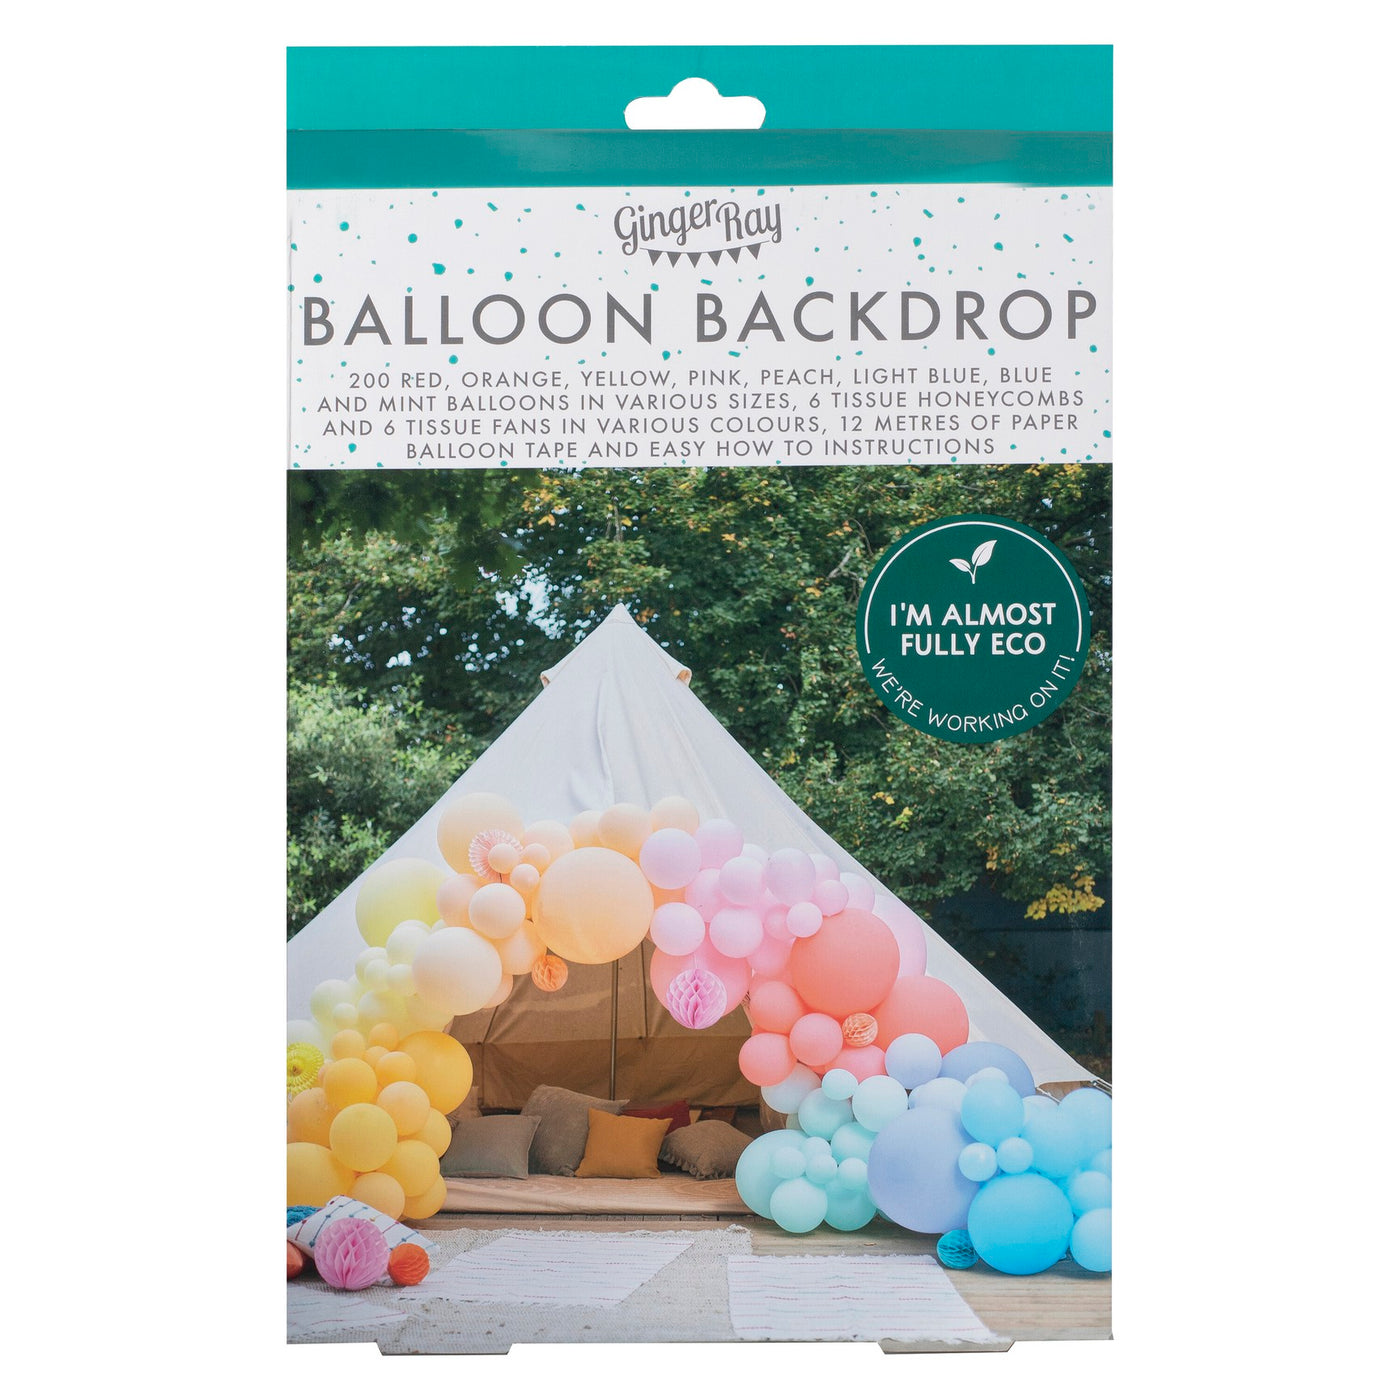 Ballongirlande Regenbogenfarben Pastell, DIY, 200 Ballons inkl. Ballonband